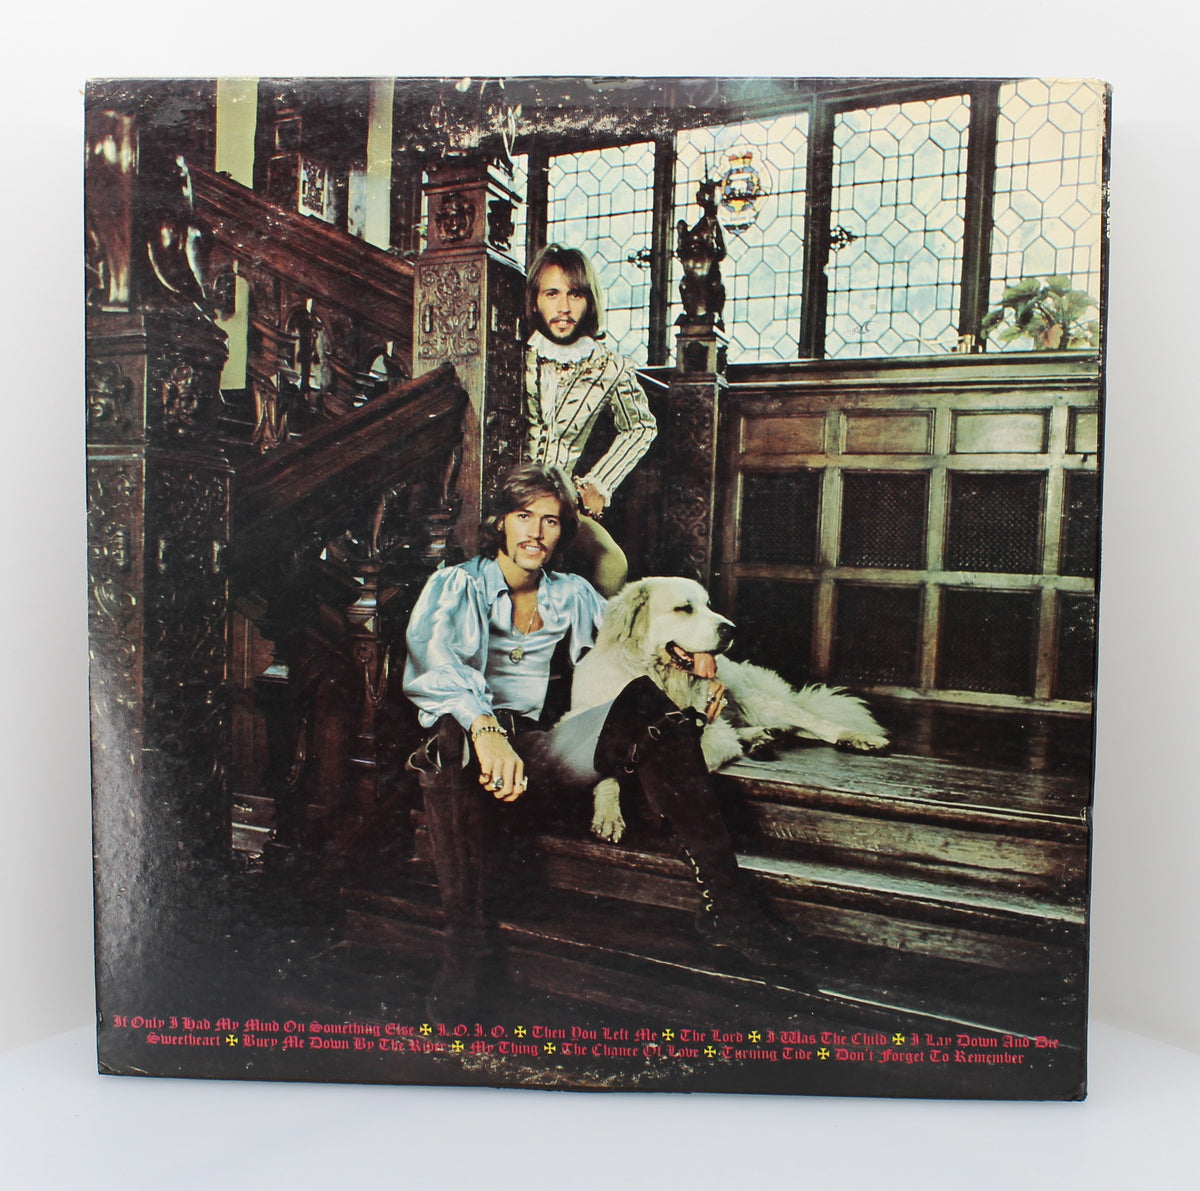 Bee Gees – Cucumber Castle, Vinyl, LP, Album, Promo, Gatefold, USA 1970